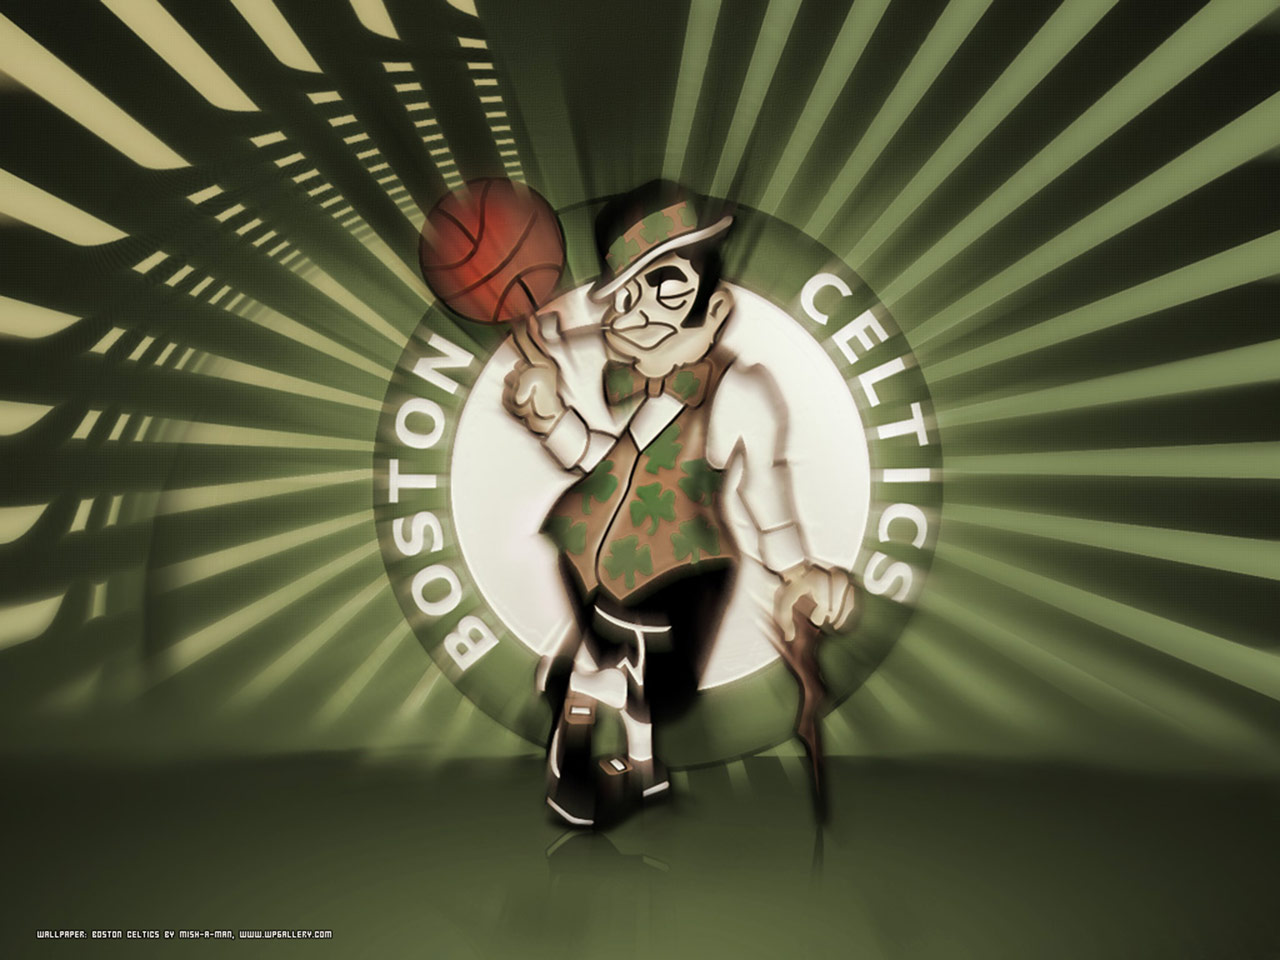 Boston Celtics Logo Wallpaper | Basketball Wallpapers at ...